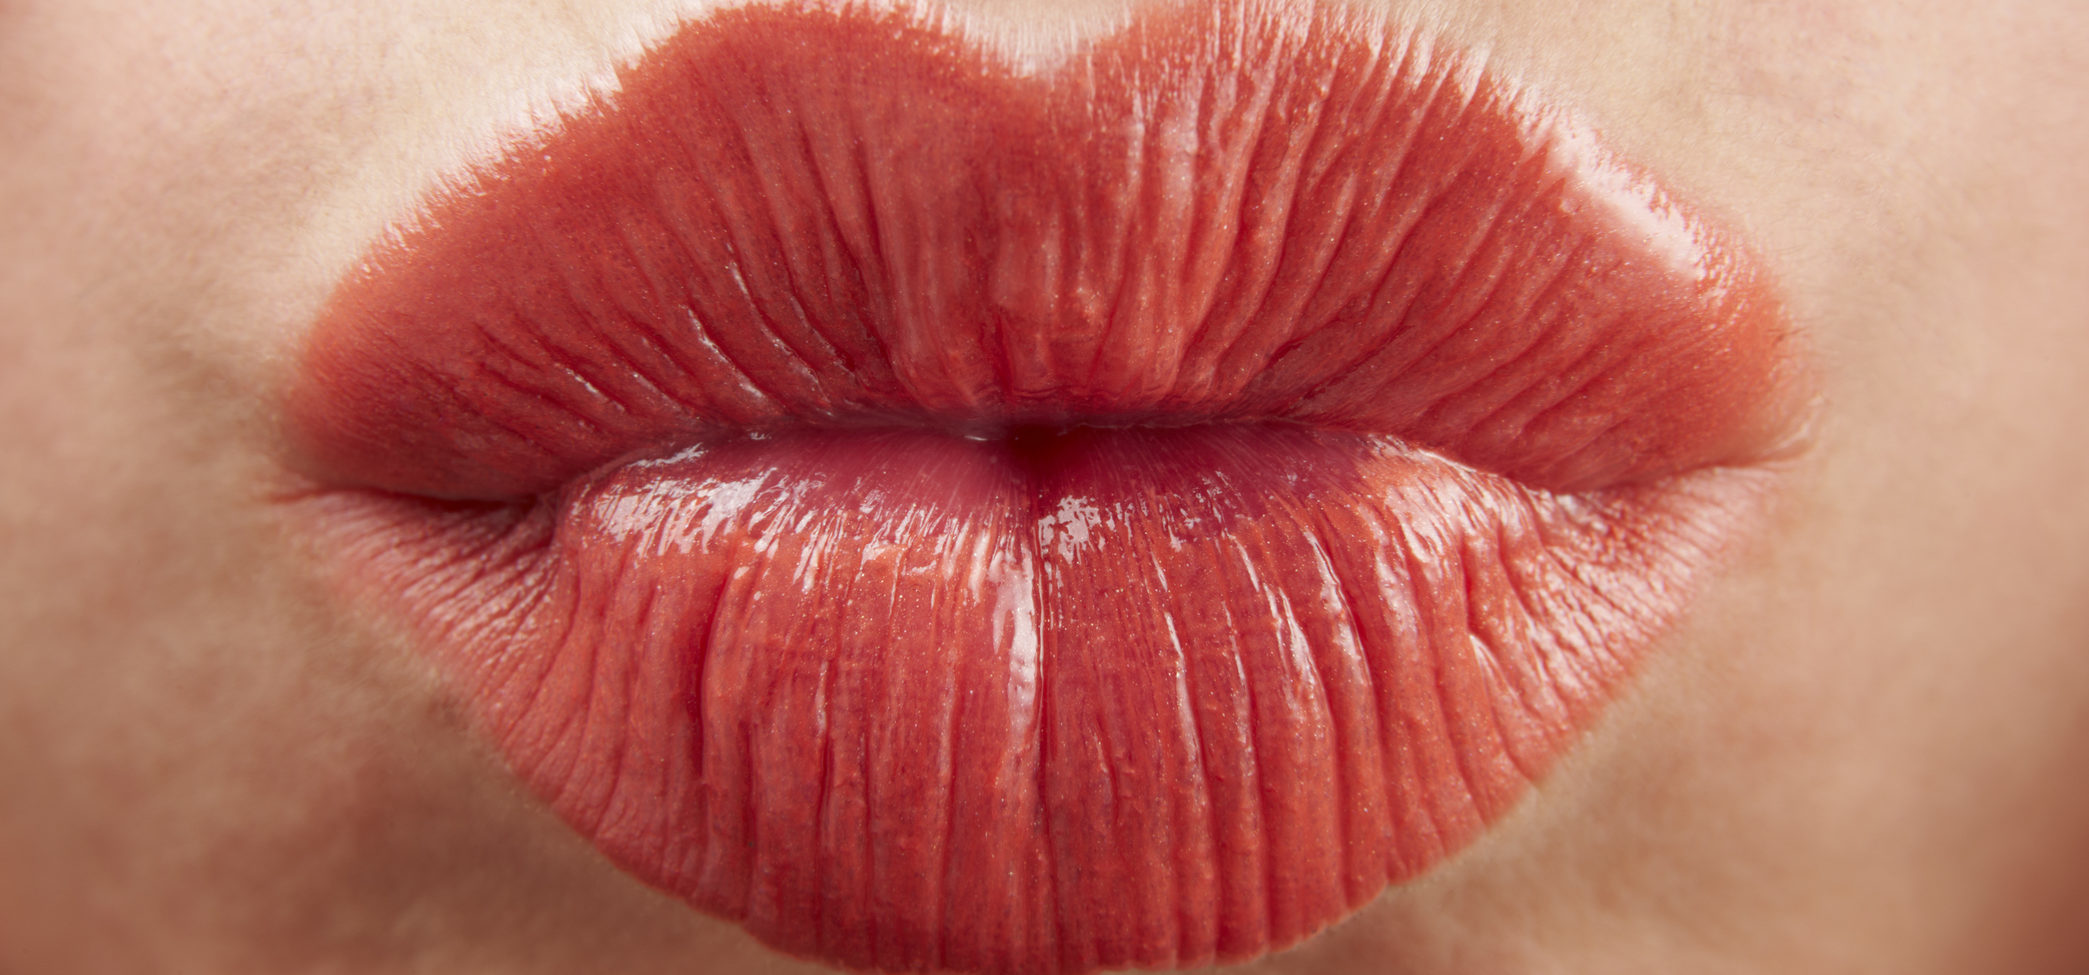 July 6 marks International Kissing Day. Getty.